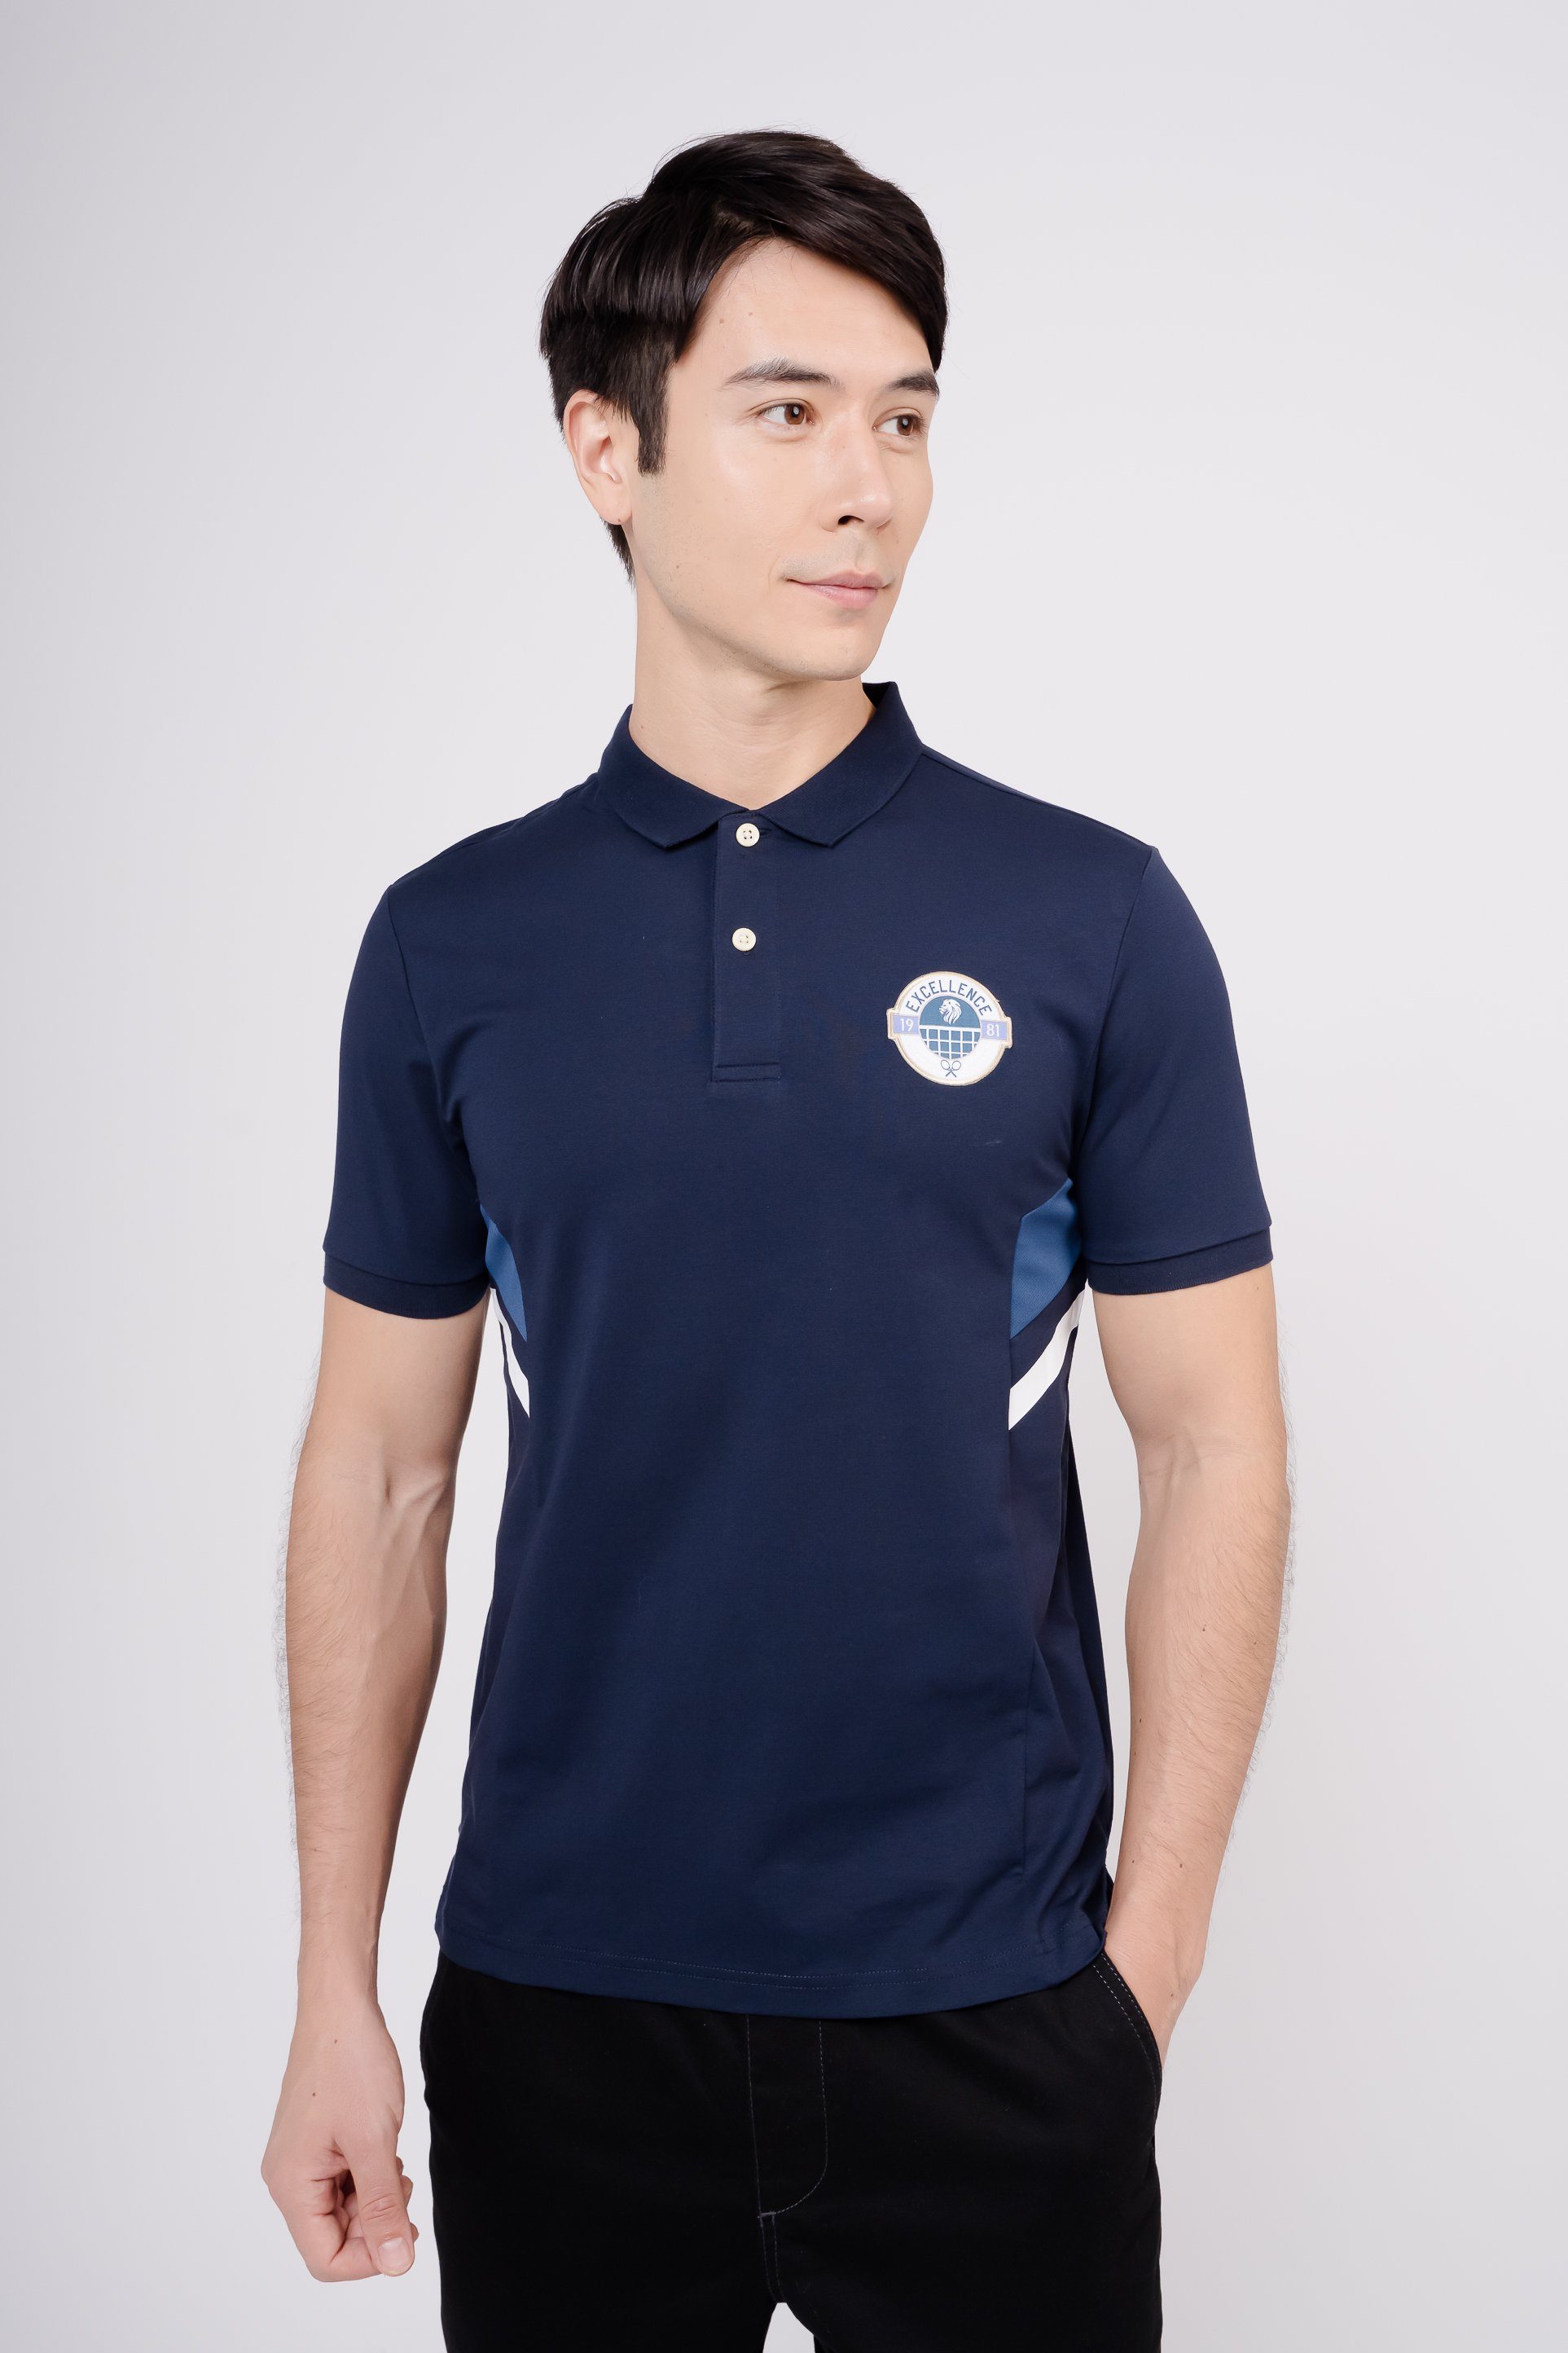 GIORDANO Poloshirt Sorona mit Quick-Dry-Technologie dunkelblau-weiß